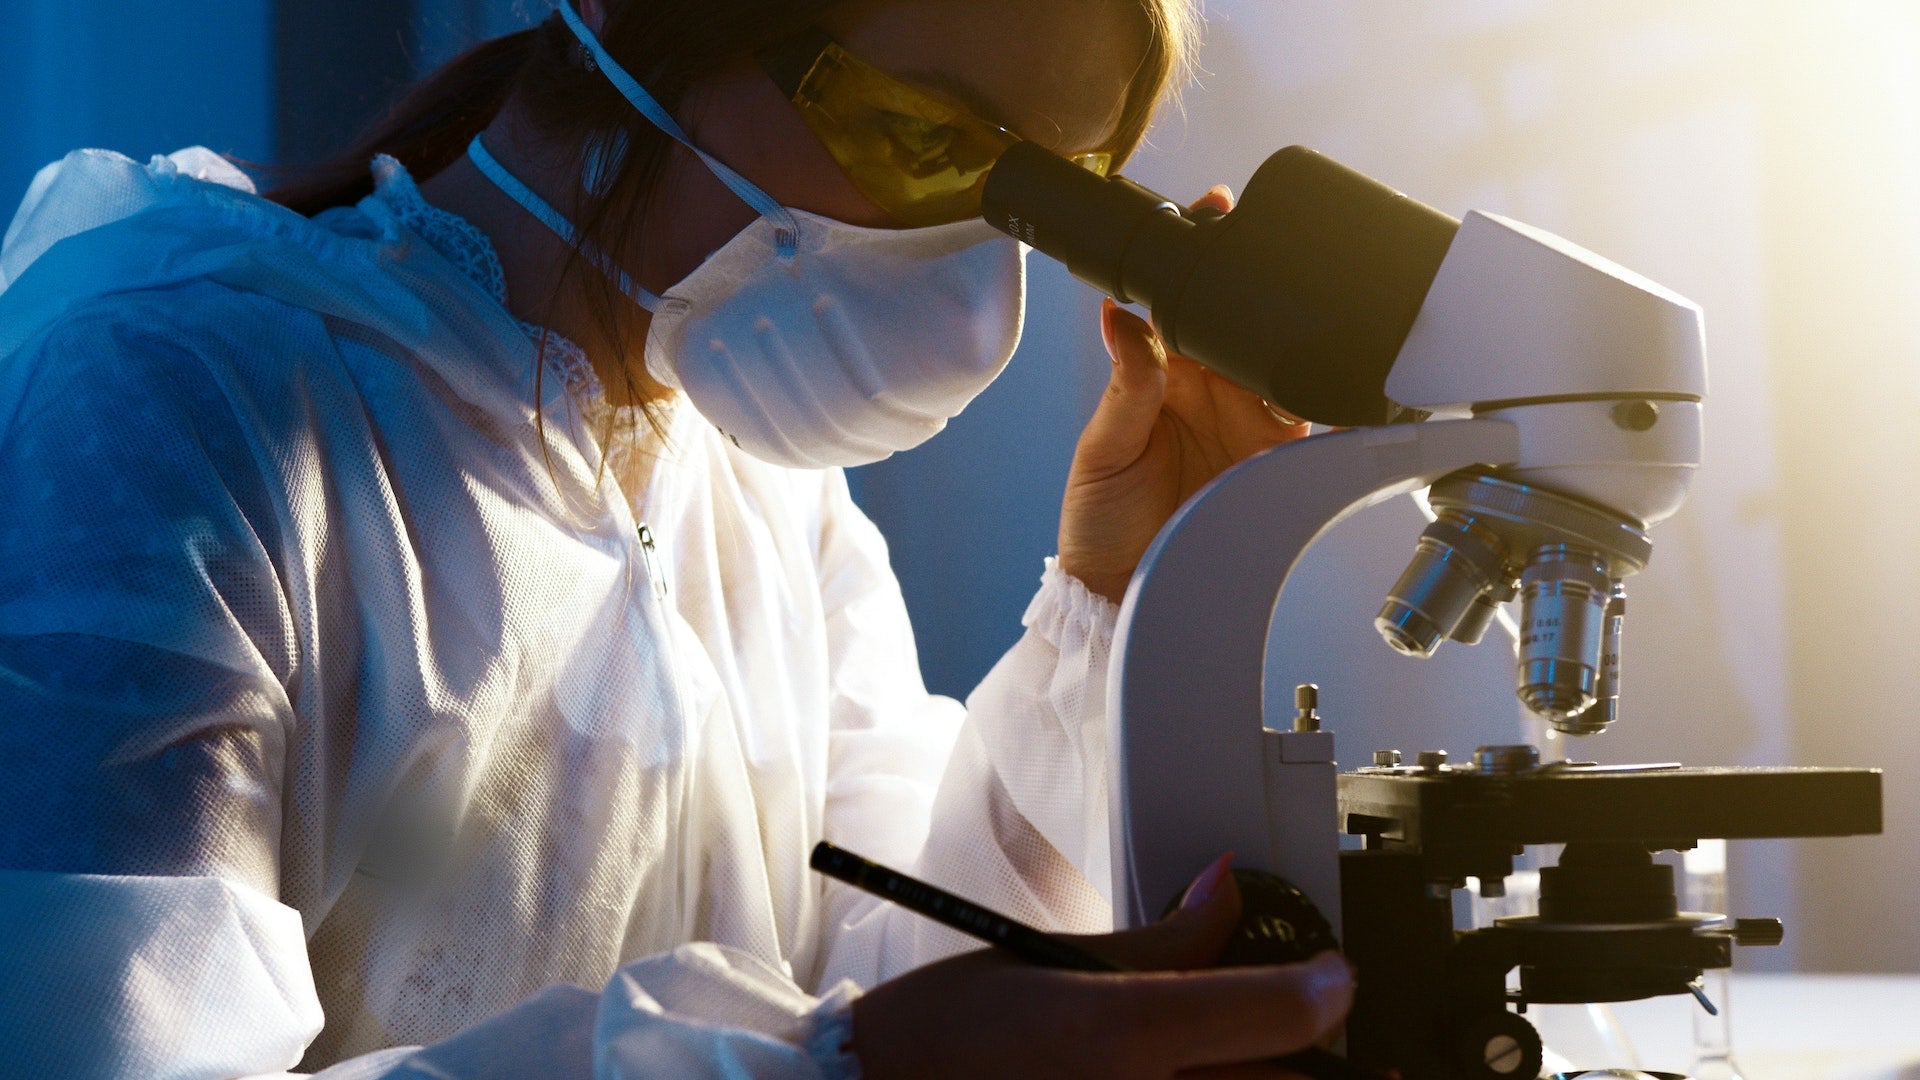 A lab technician examines a specimen under a microscope.